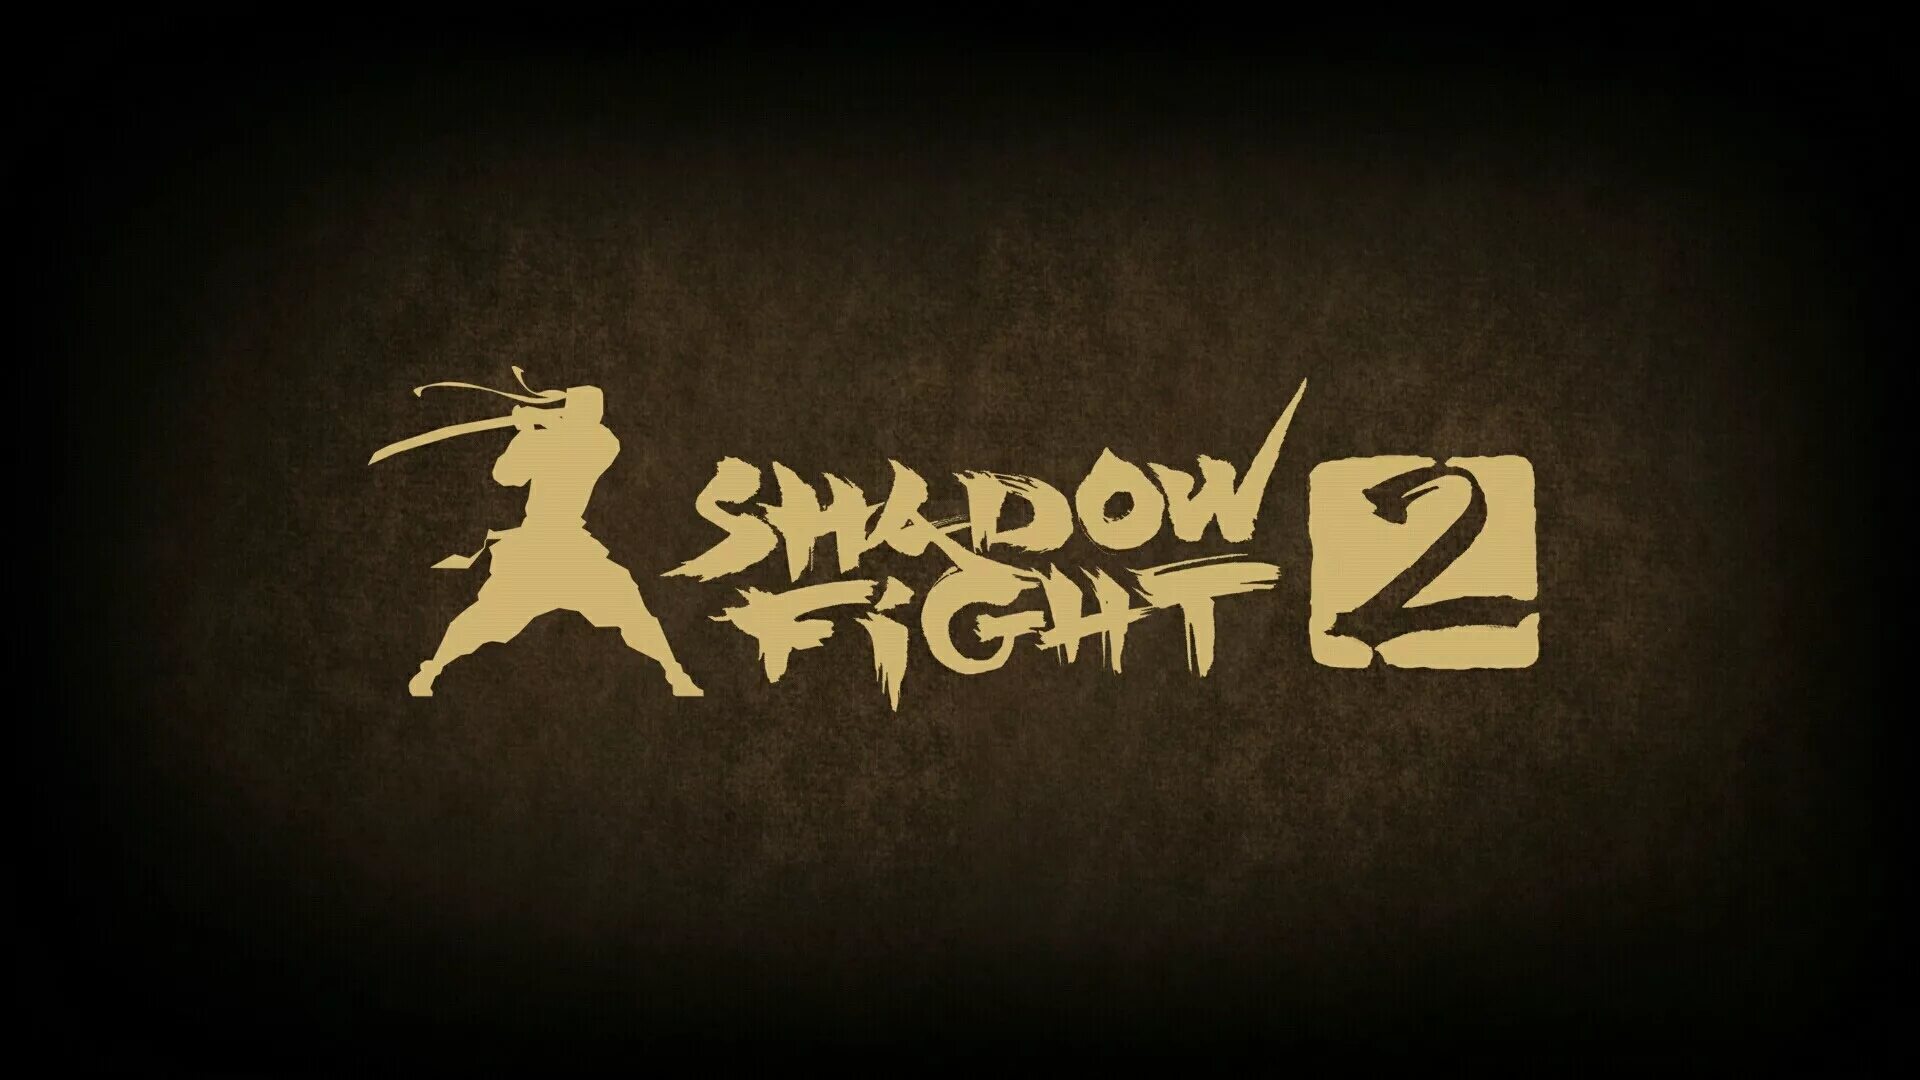 Шадуфайт 2. Shadow Fight 2. Shadow файт 2. Shadow Fight 2 logo. Шадоу файт 2 Special Edition.